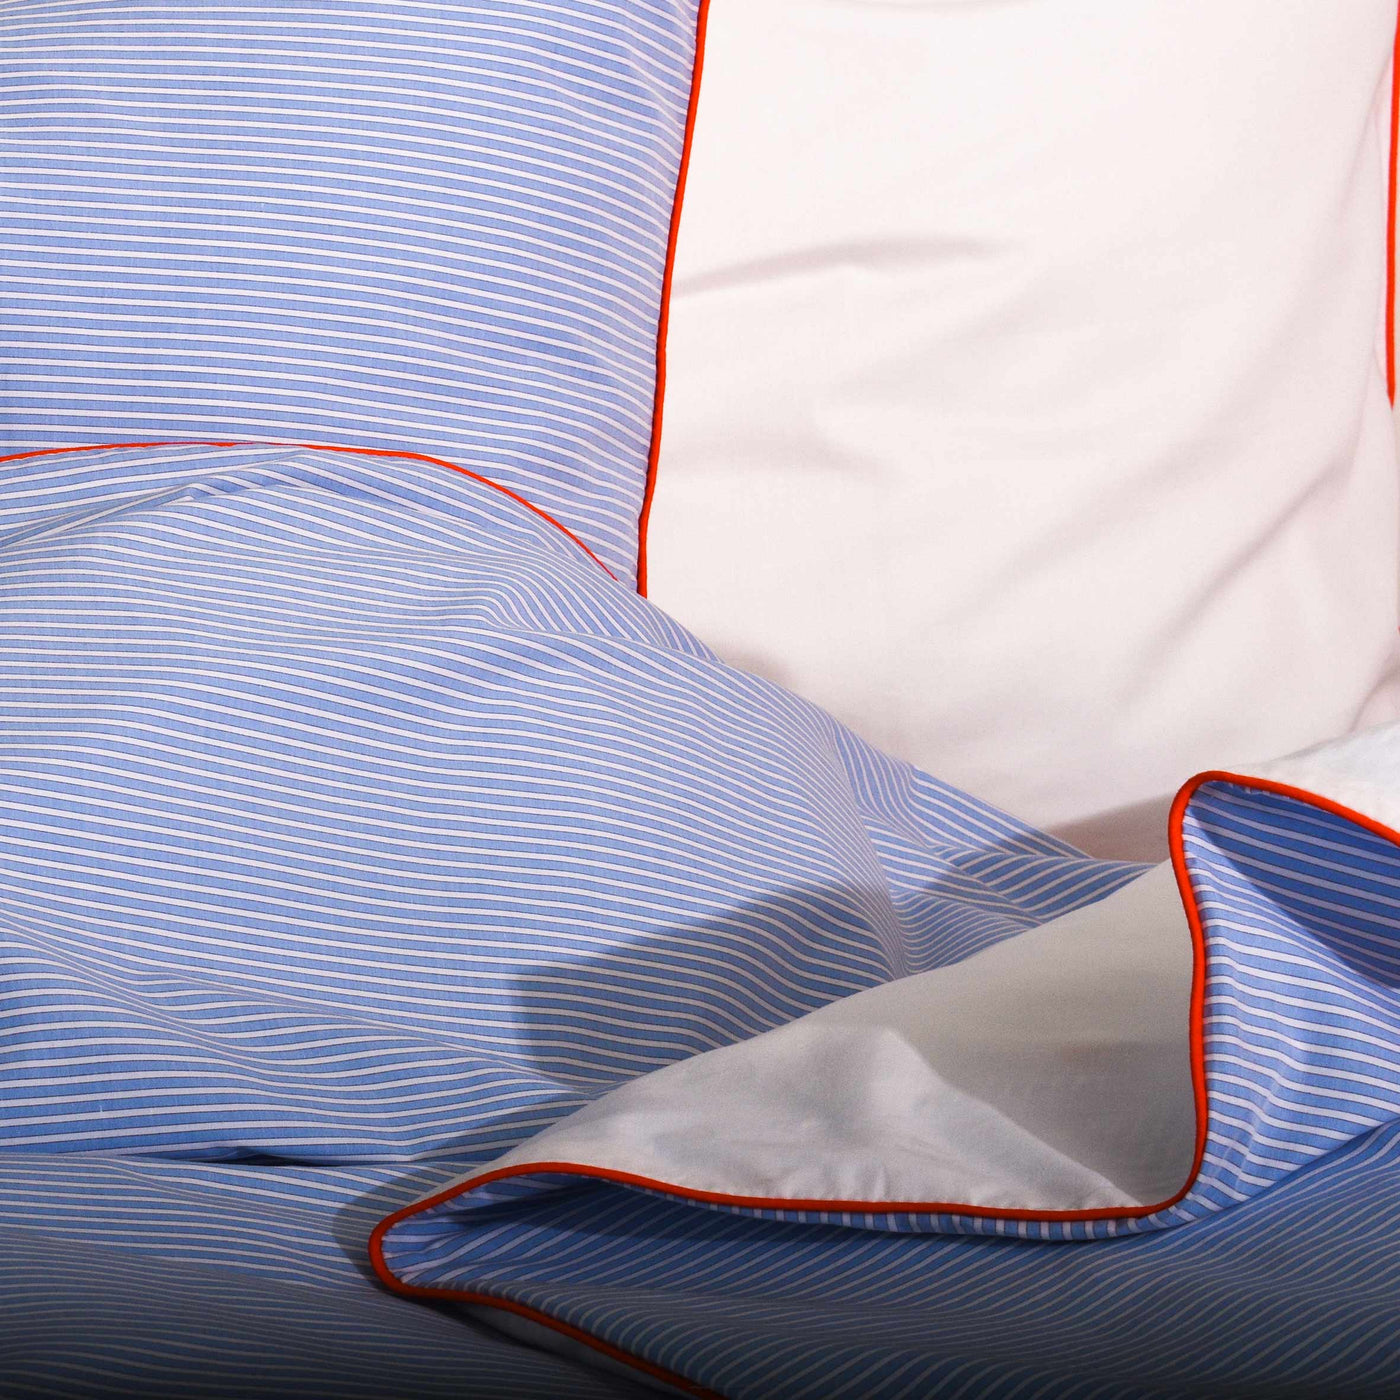 COTTON PERCALE stripe pillow case Blue stripe Orange piping